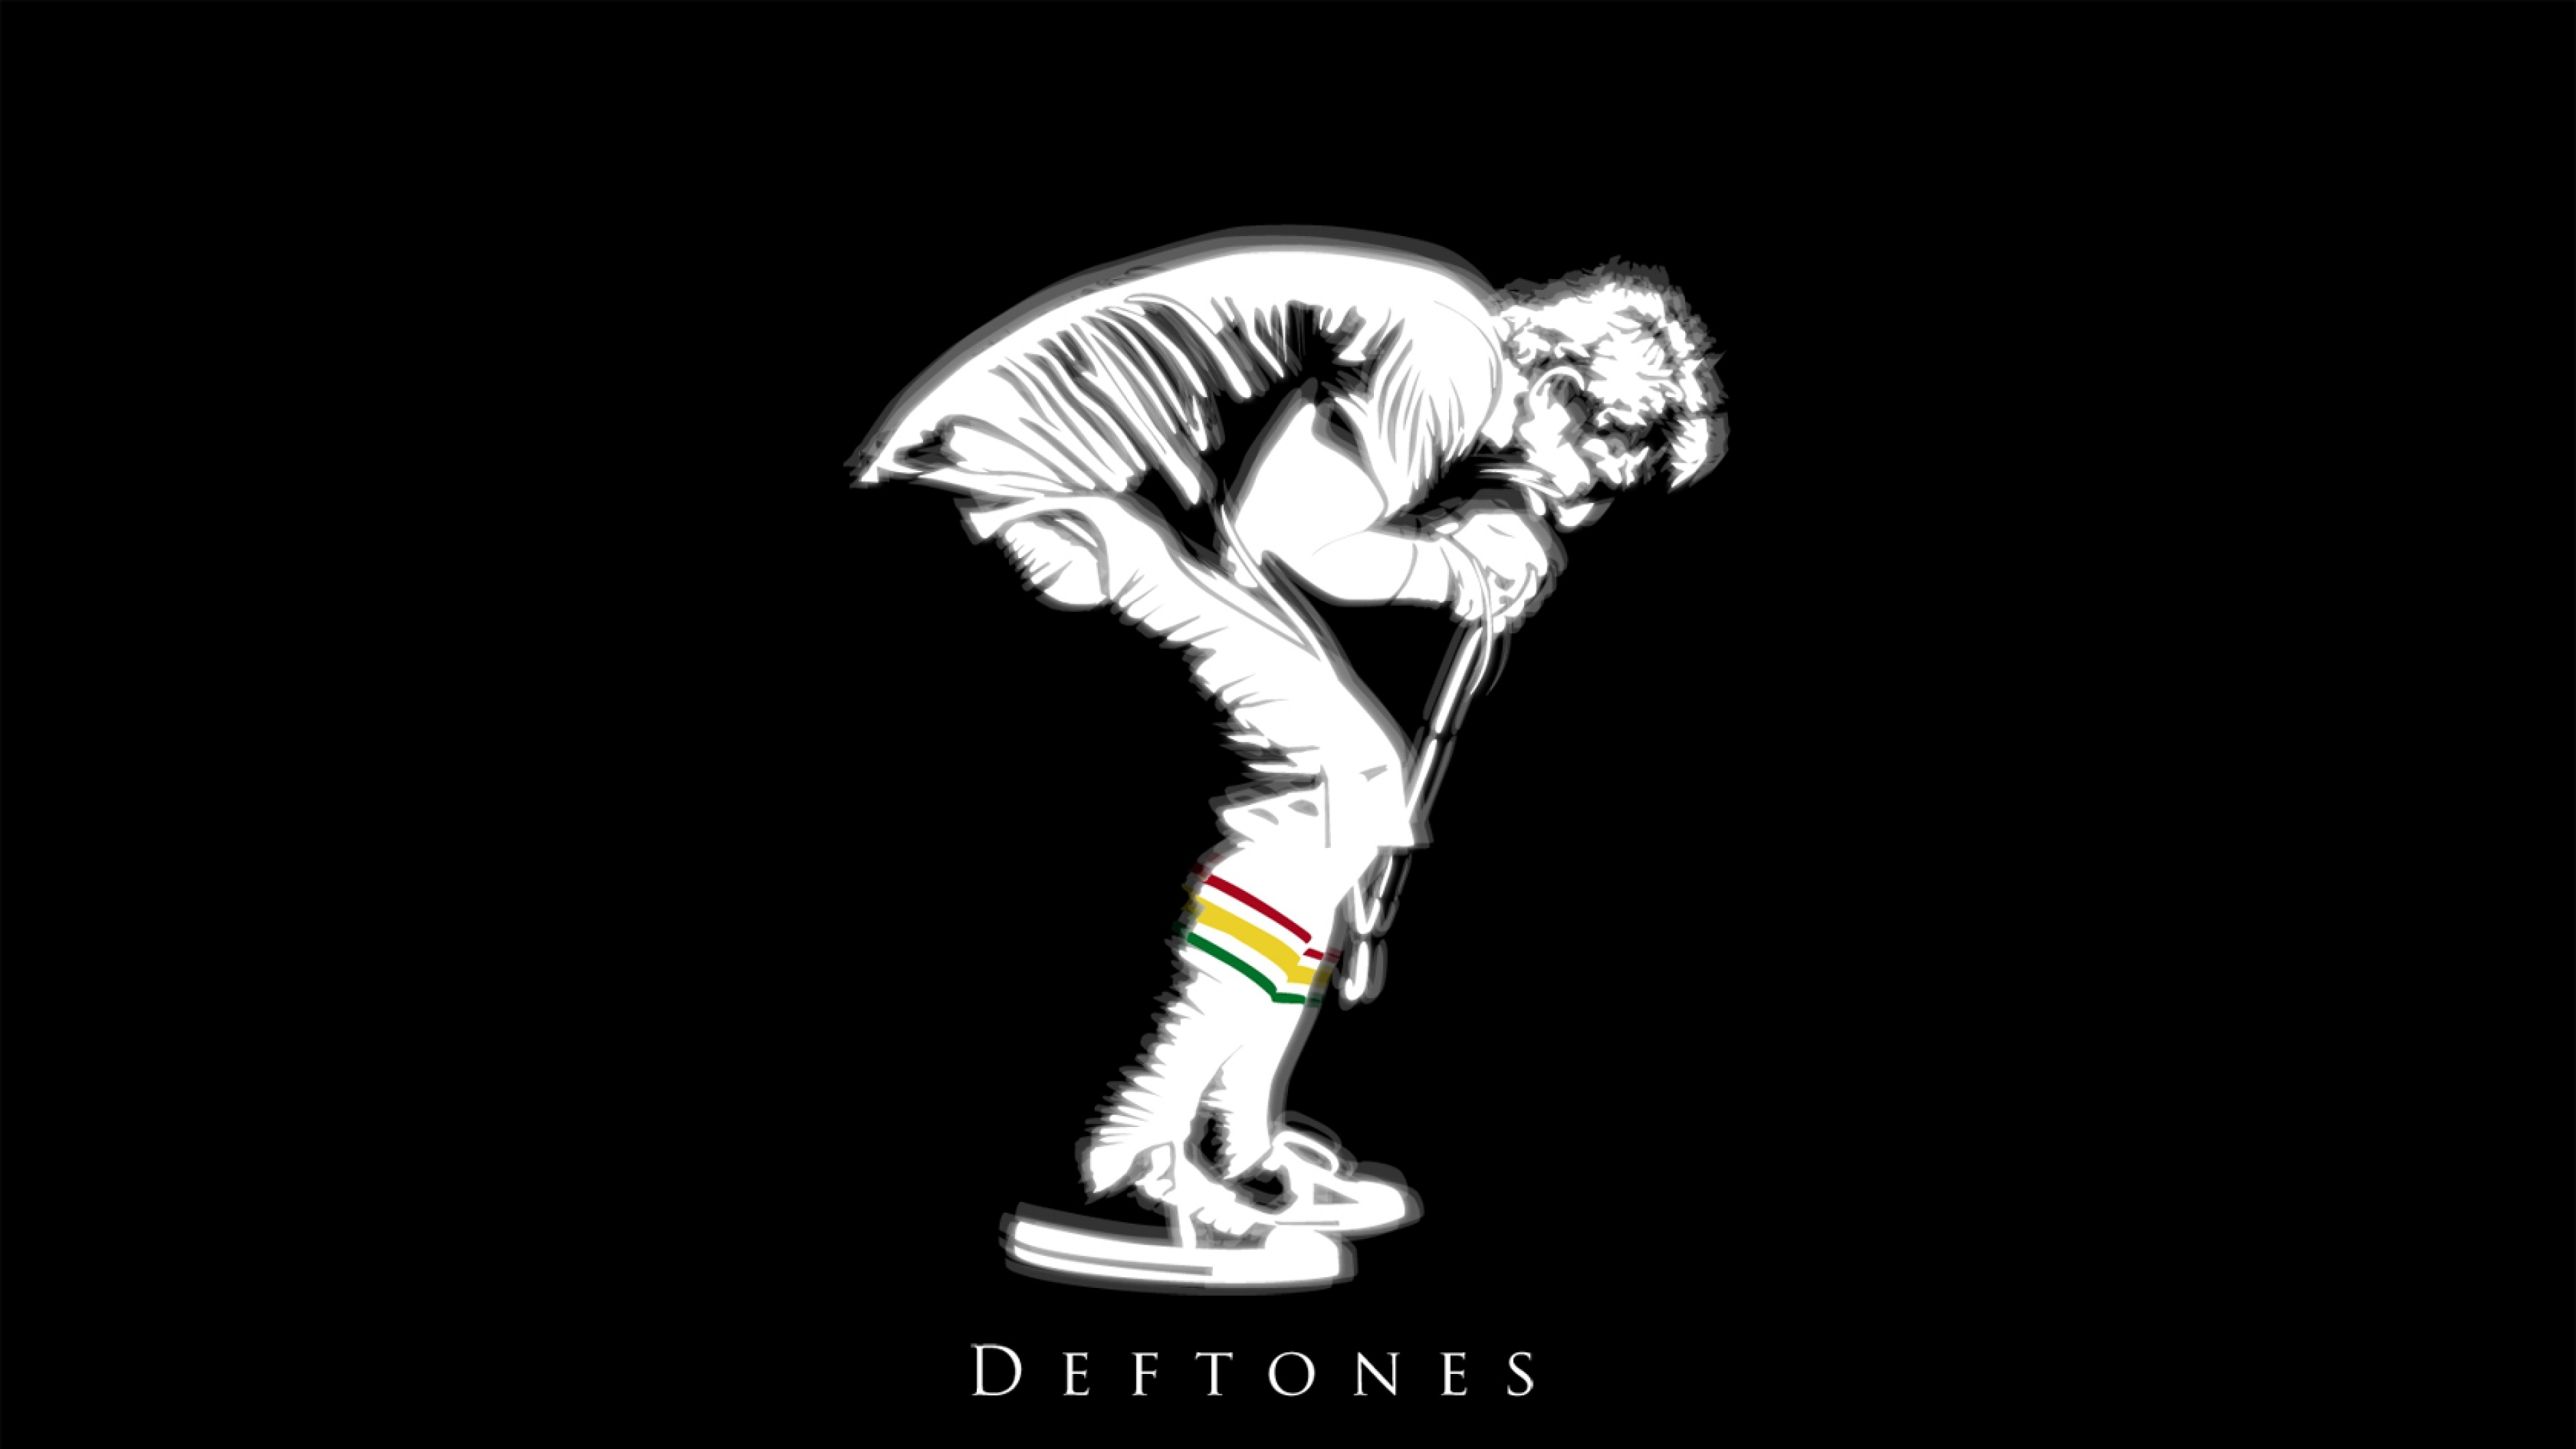 Deftones Background Silhouette Singer Microphone 4k Ultra HD